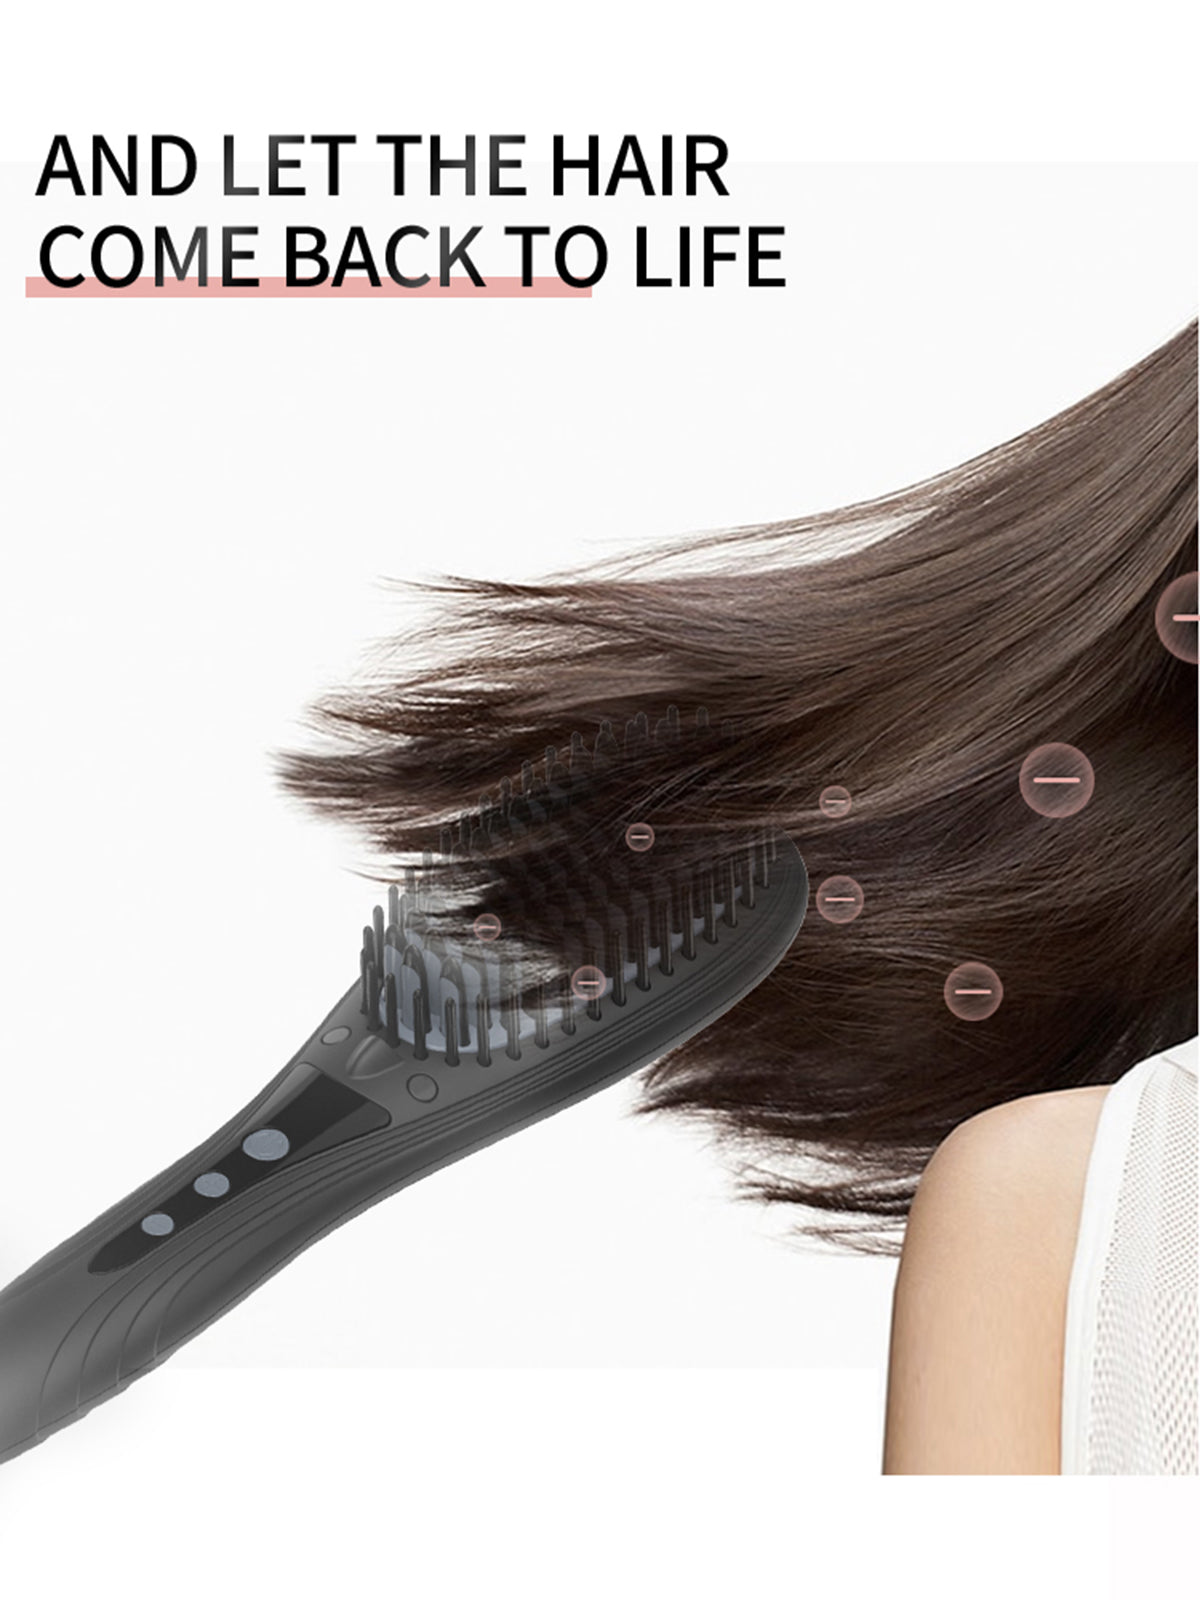 Bomidi HB1 Electric Hair Straightener Brush Multifunctional Hair Comb - Pink